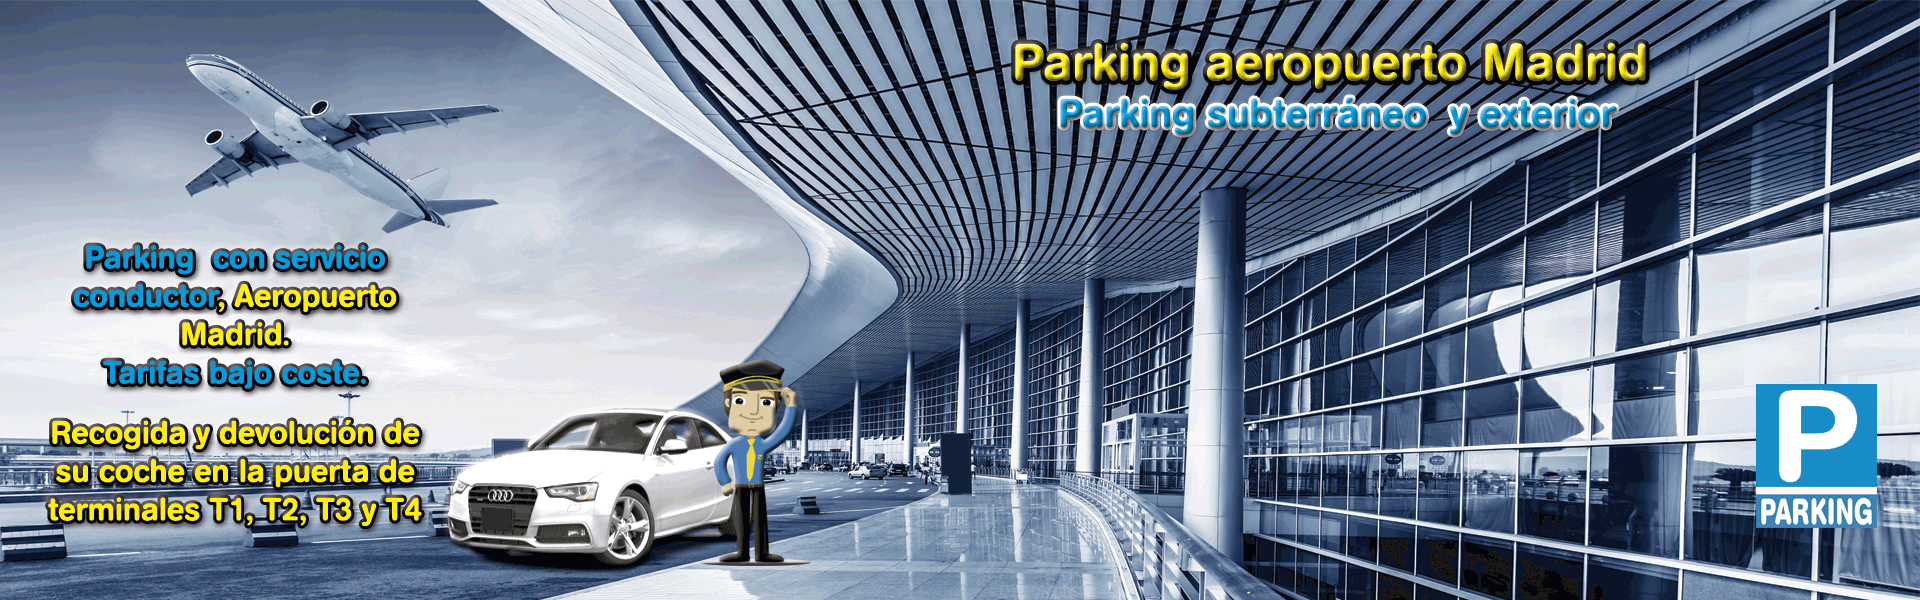 Parking Aeropuerto Madrid